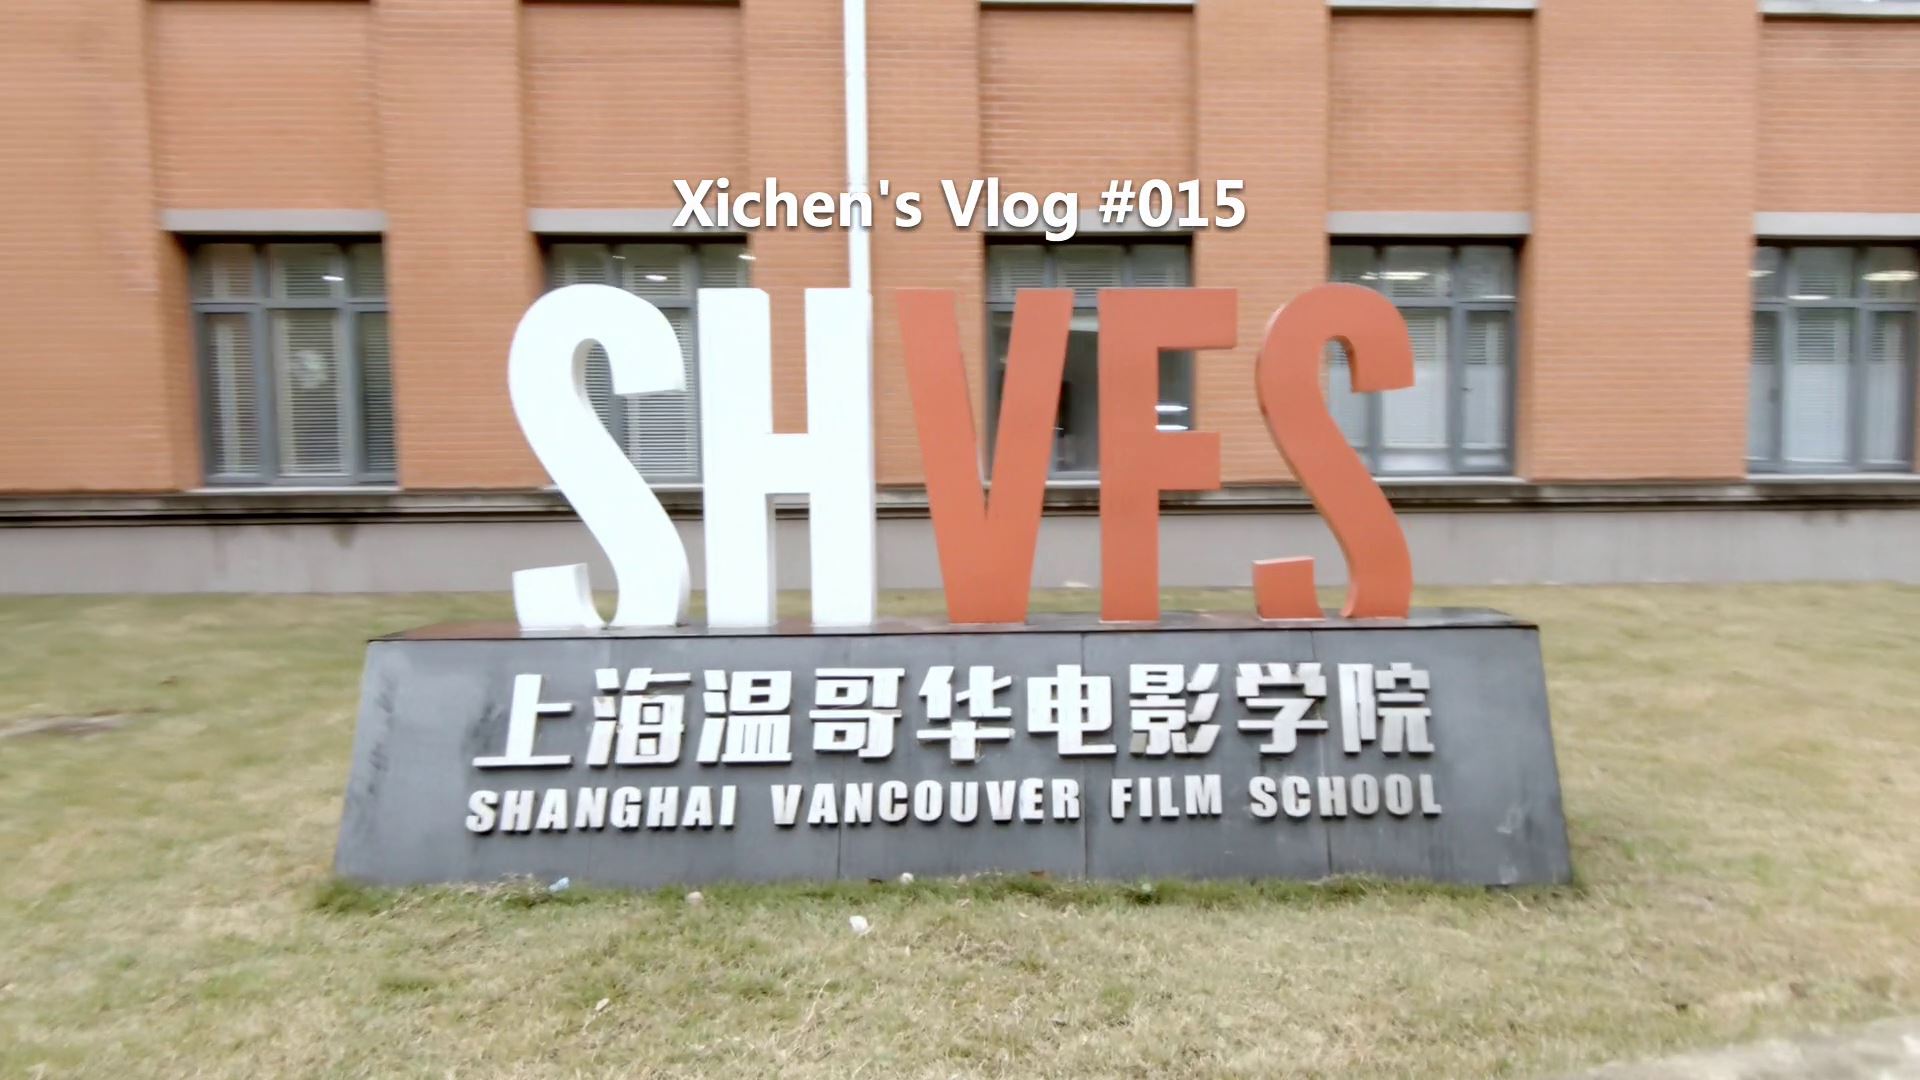 Xichen Vlog 015 Cover